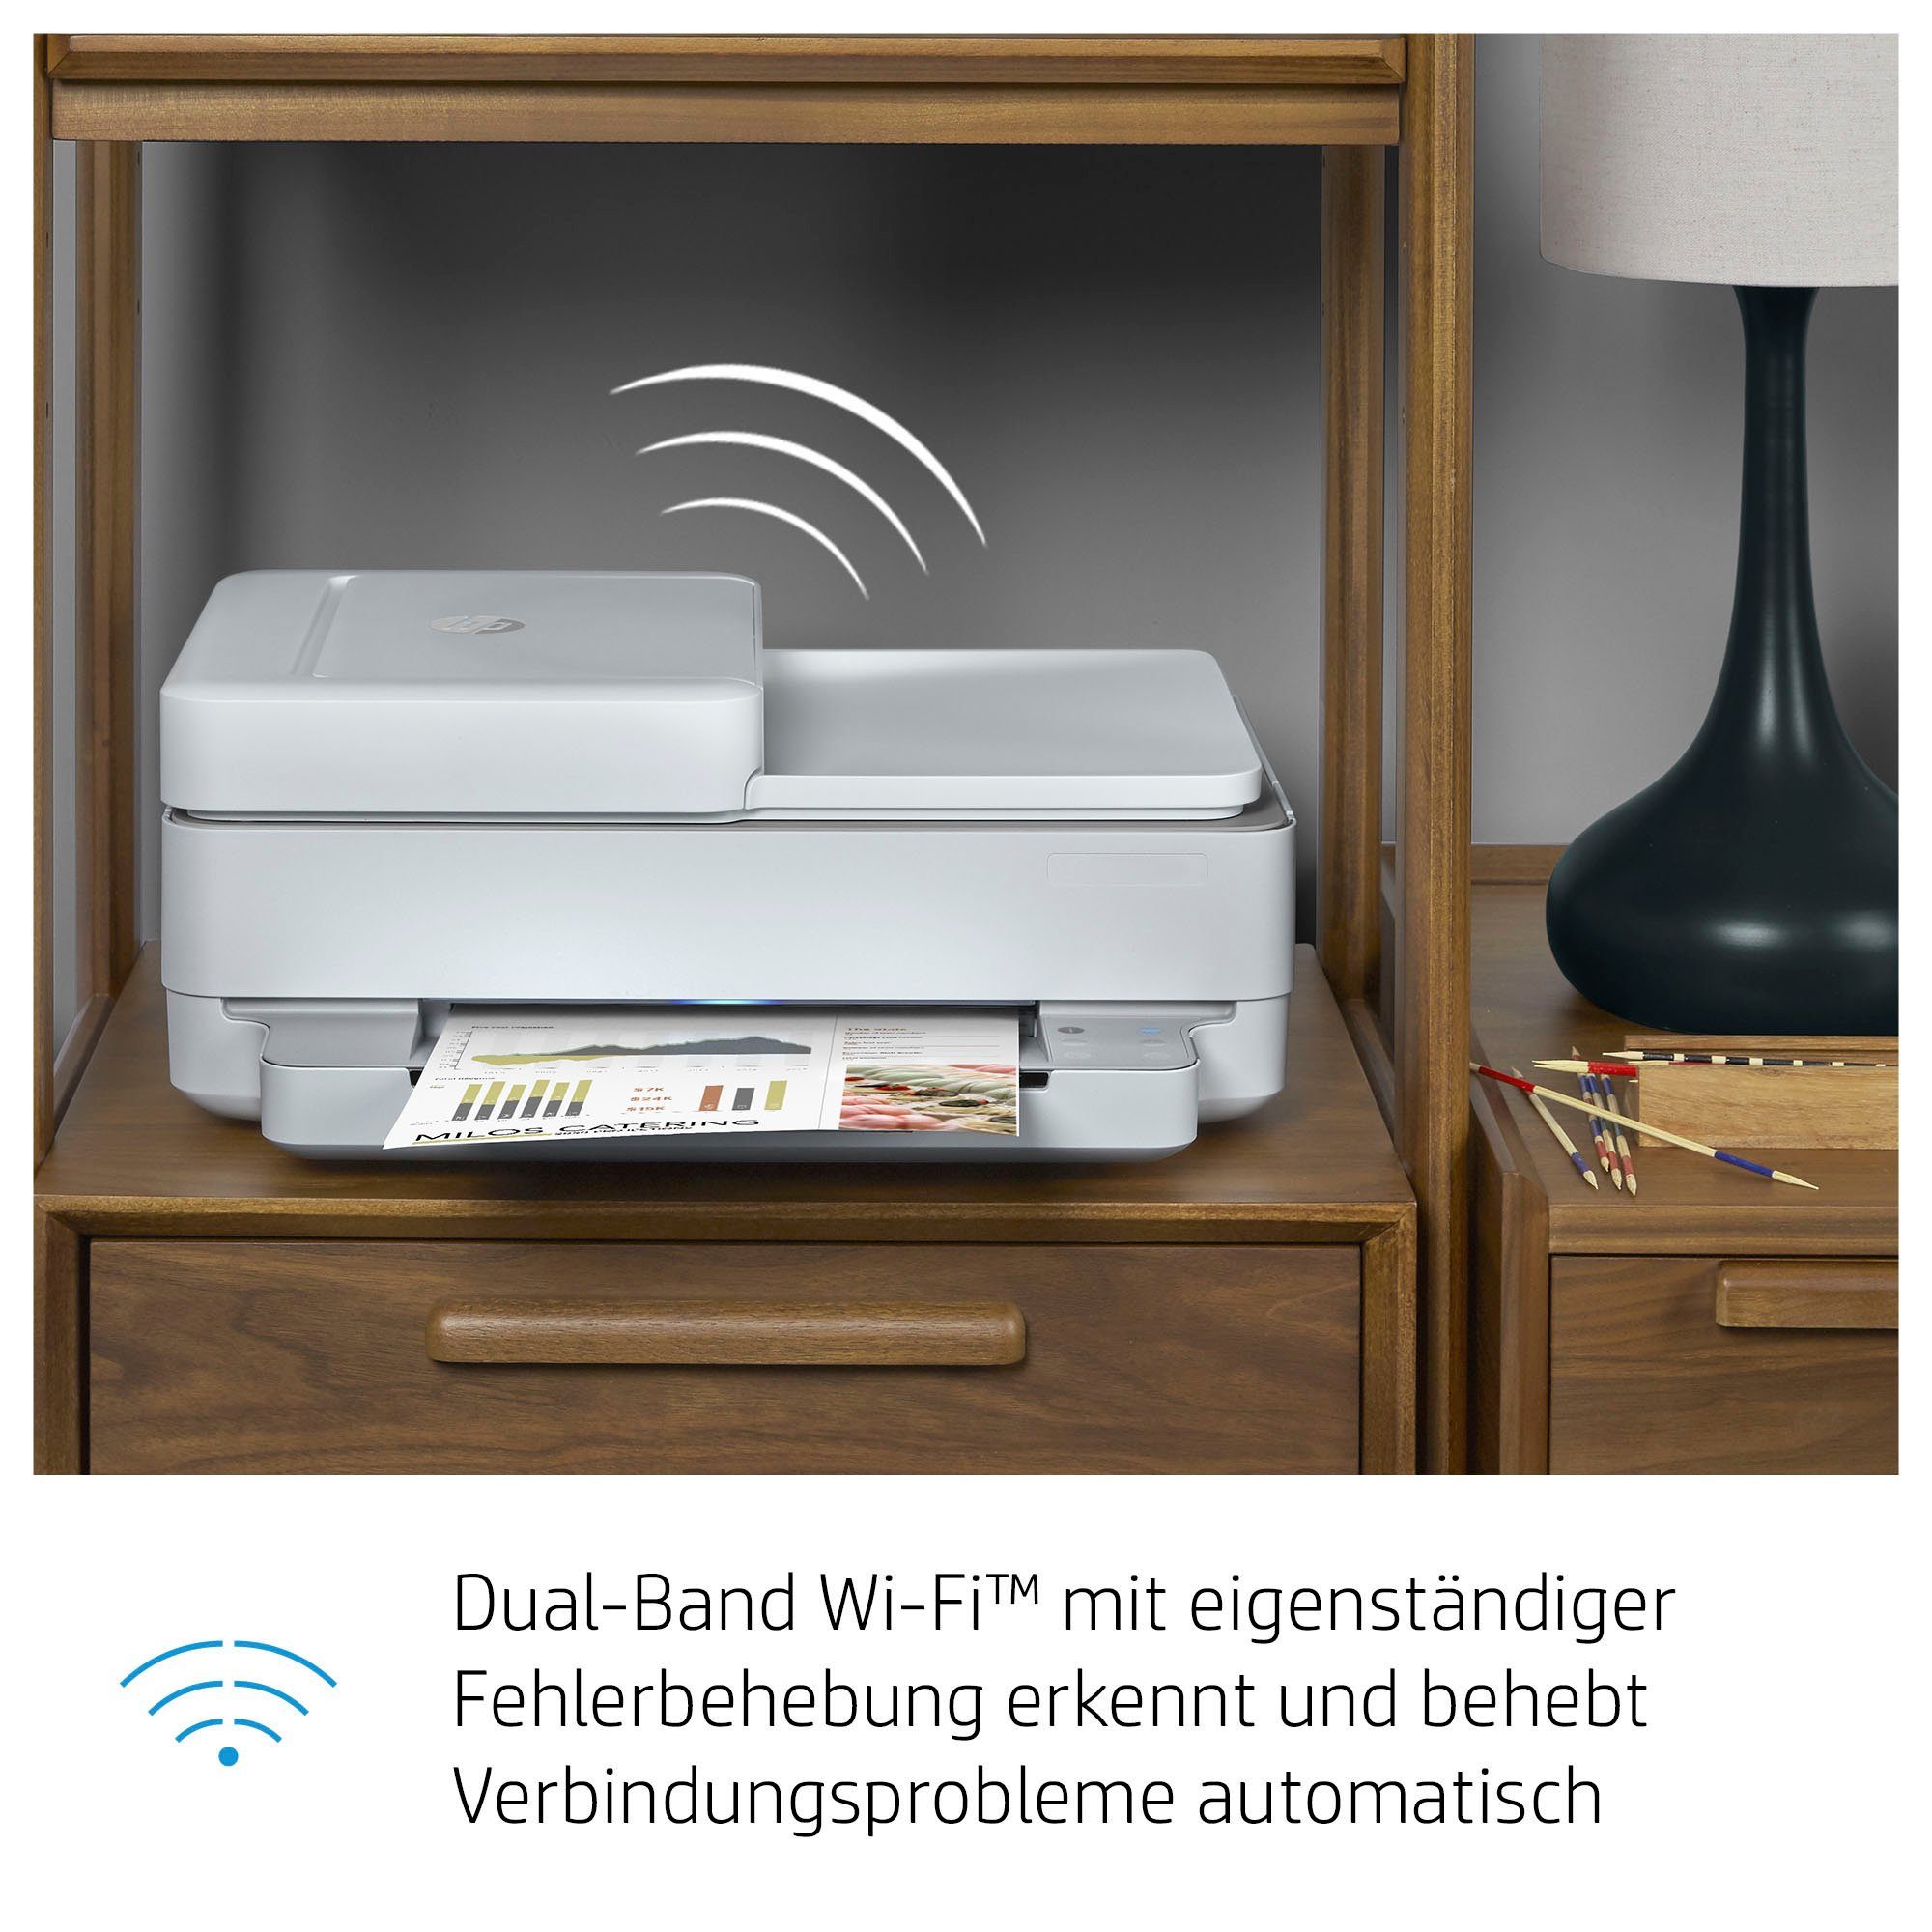 HP ENVY A4 (Wi-Fi), Ink Multifunktionsdrucker, kompatibel) 7ppm Instant Printer HP+ 6420e color AiO (WLAN